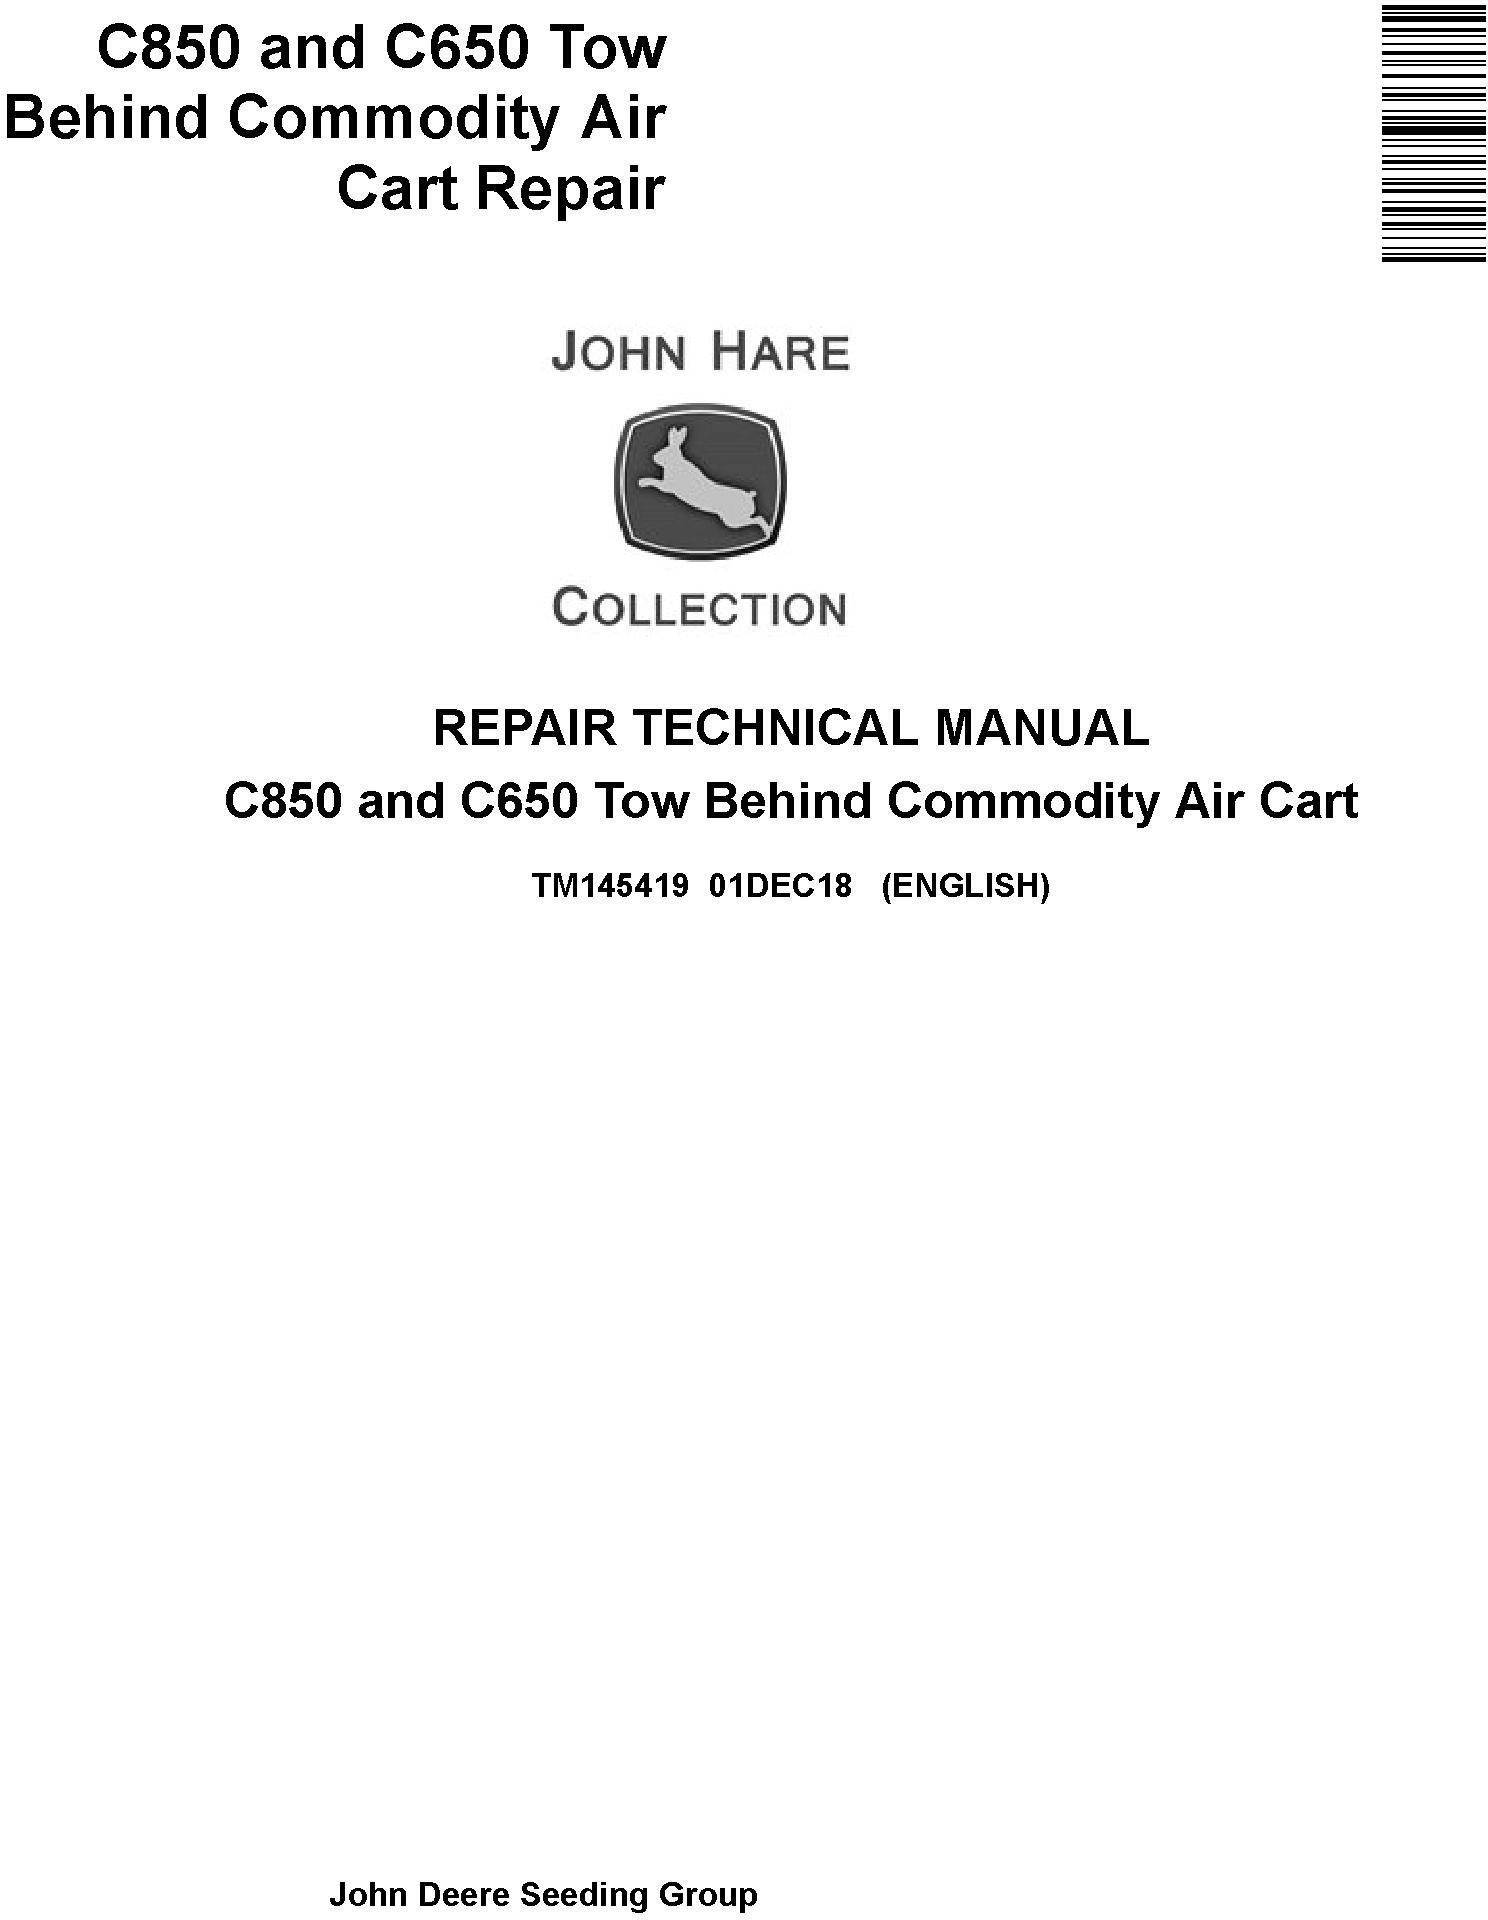 John Deere C850 C650 Tow Behind Commodity Air Cart Repair Technical Manual TM145419